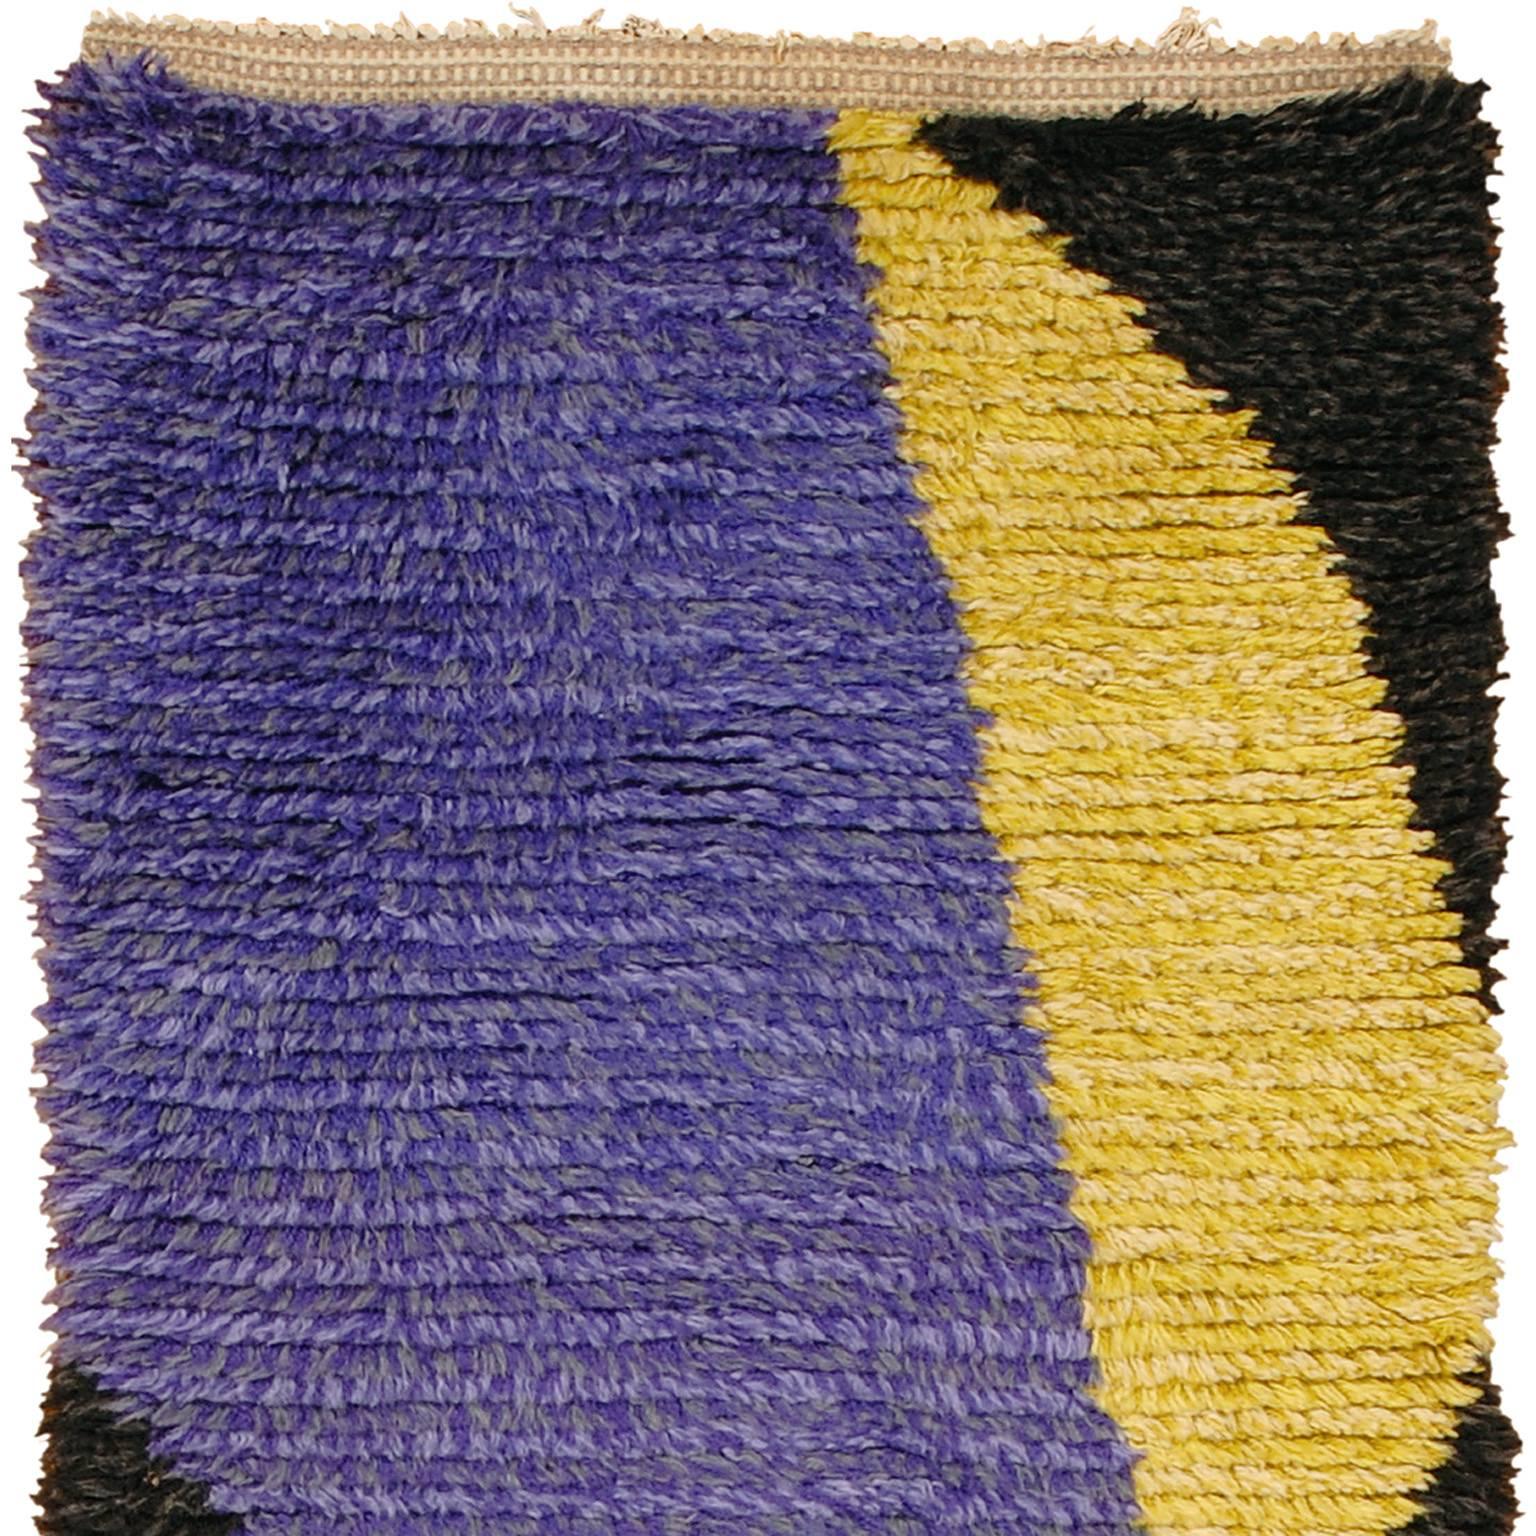 Mid-20th century Swedish rya carpet.